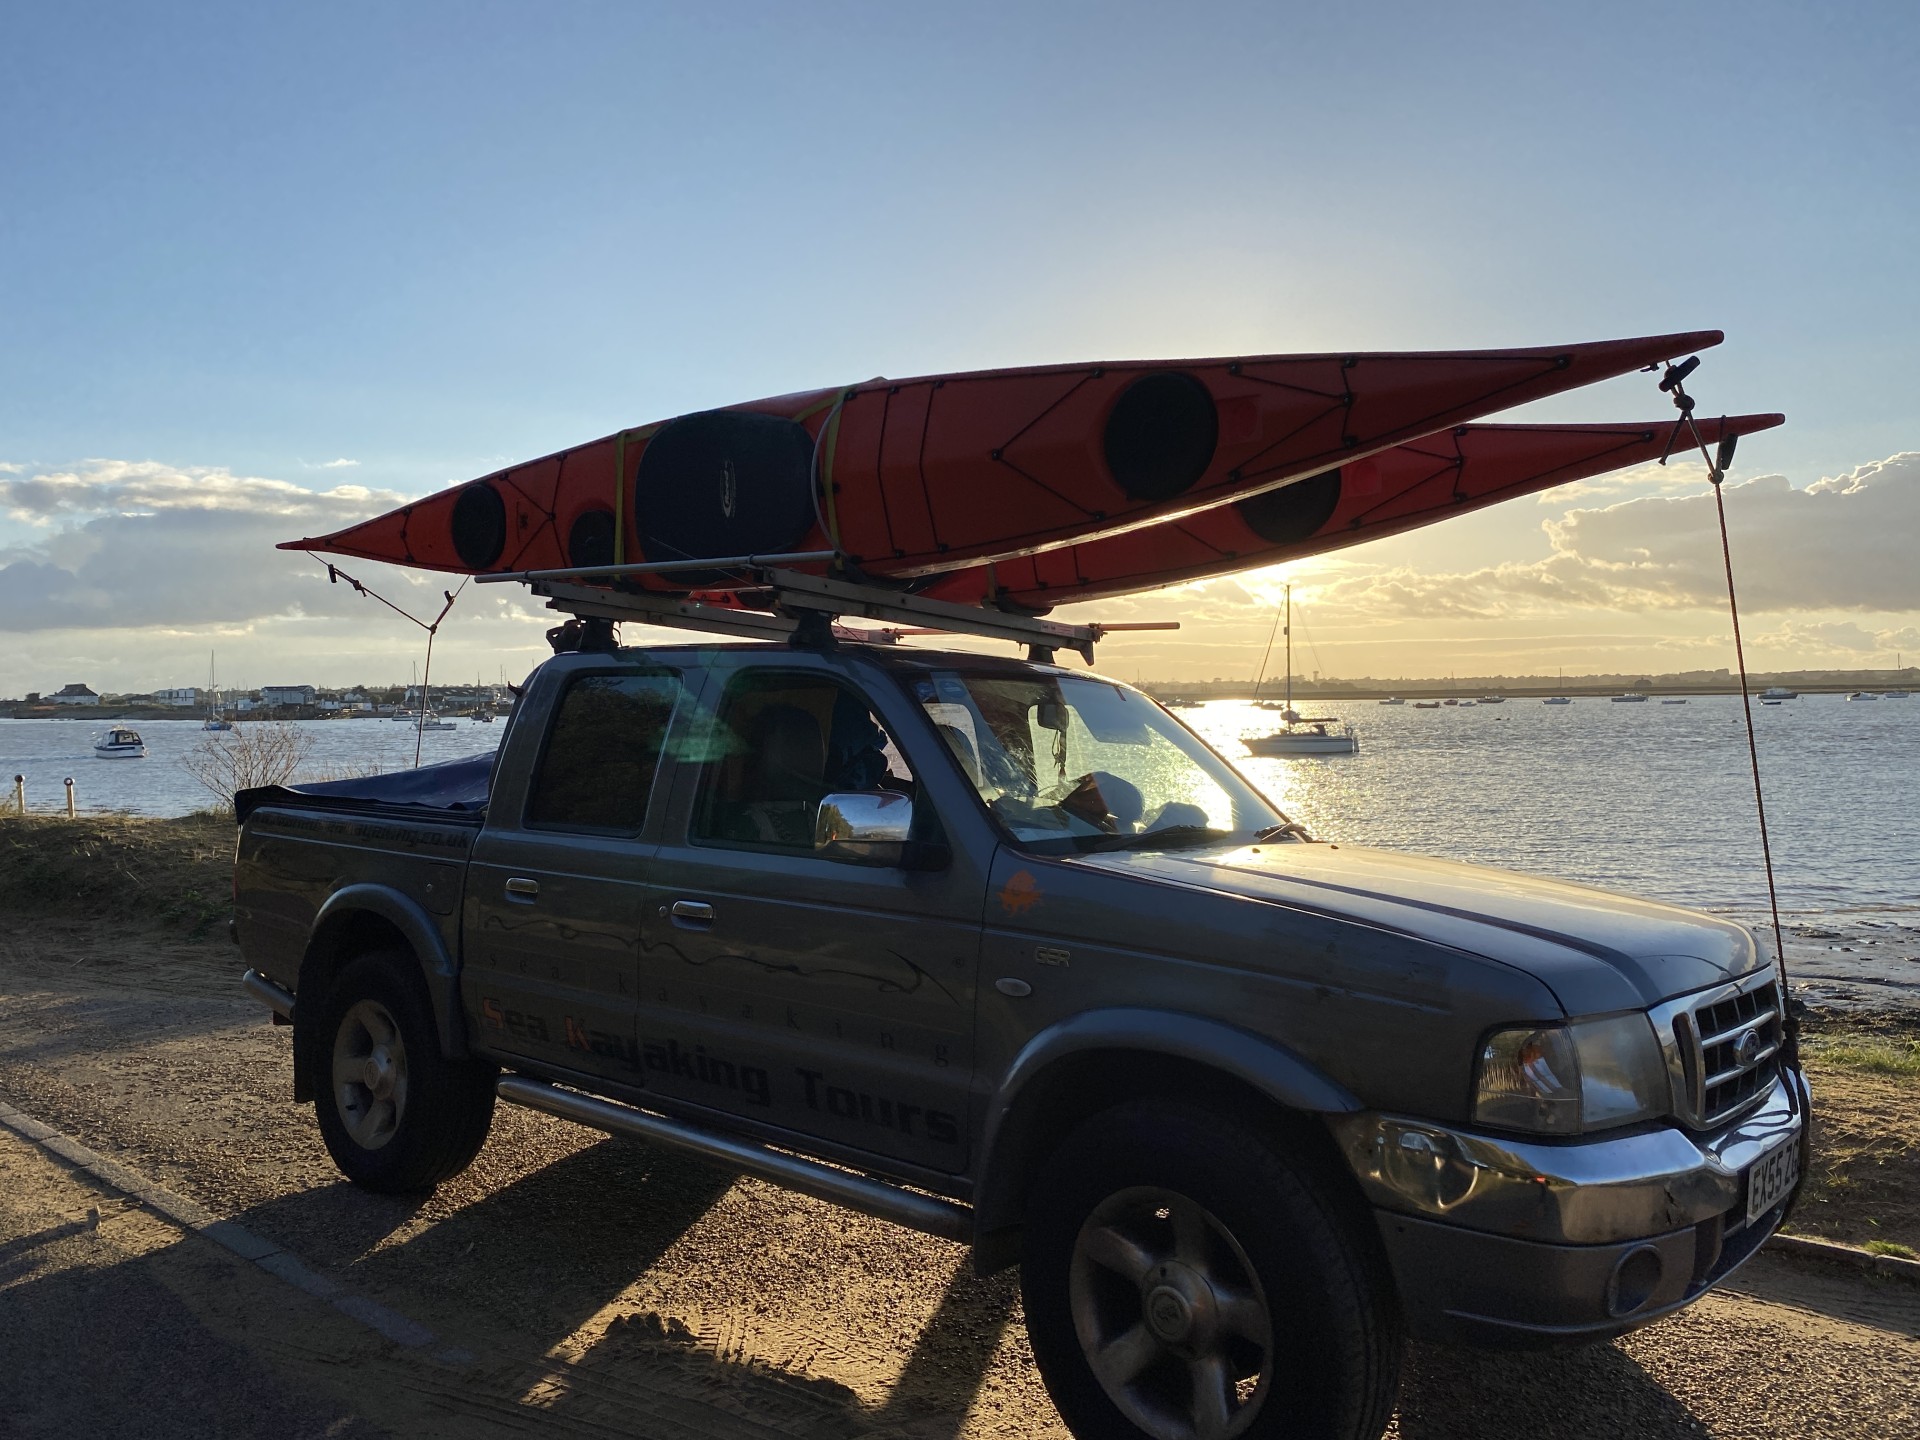 Red Sea kayaks on roof racks with NOMAD Sea Kayaking.